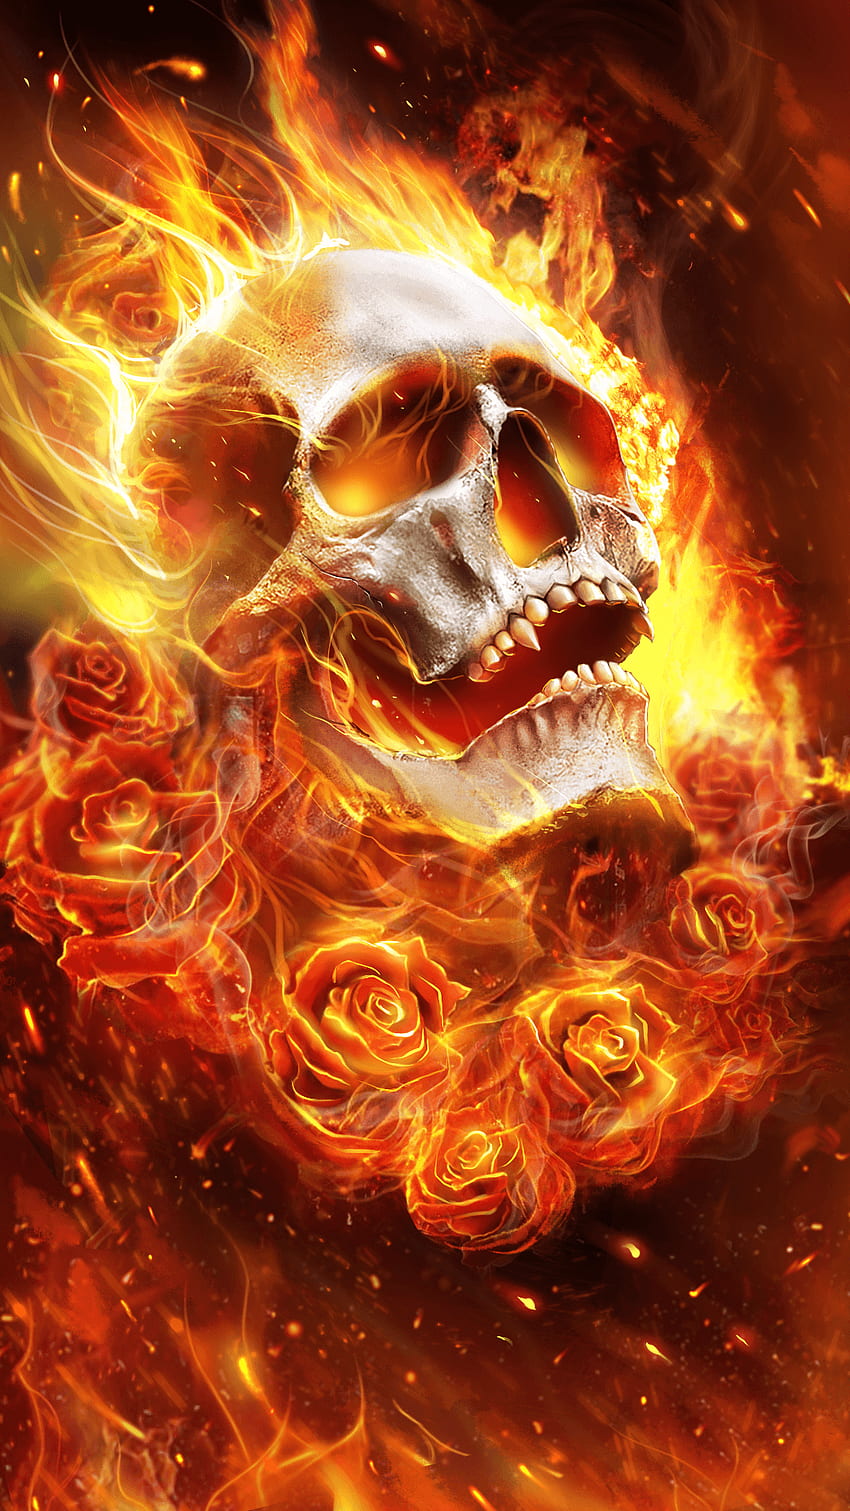 Flaming Skull Design by rawjawbone on DeviantArt